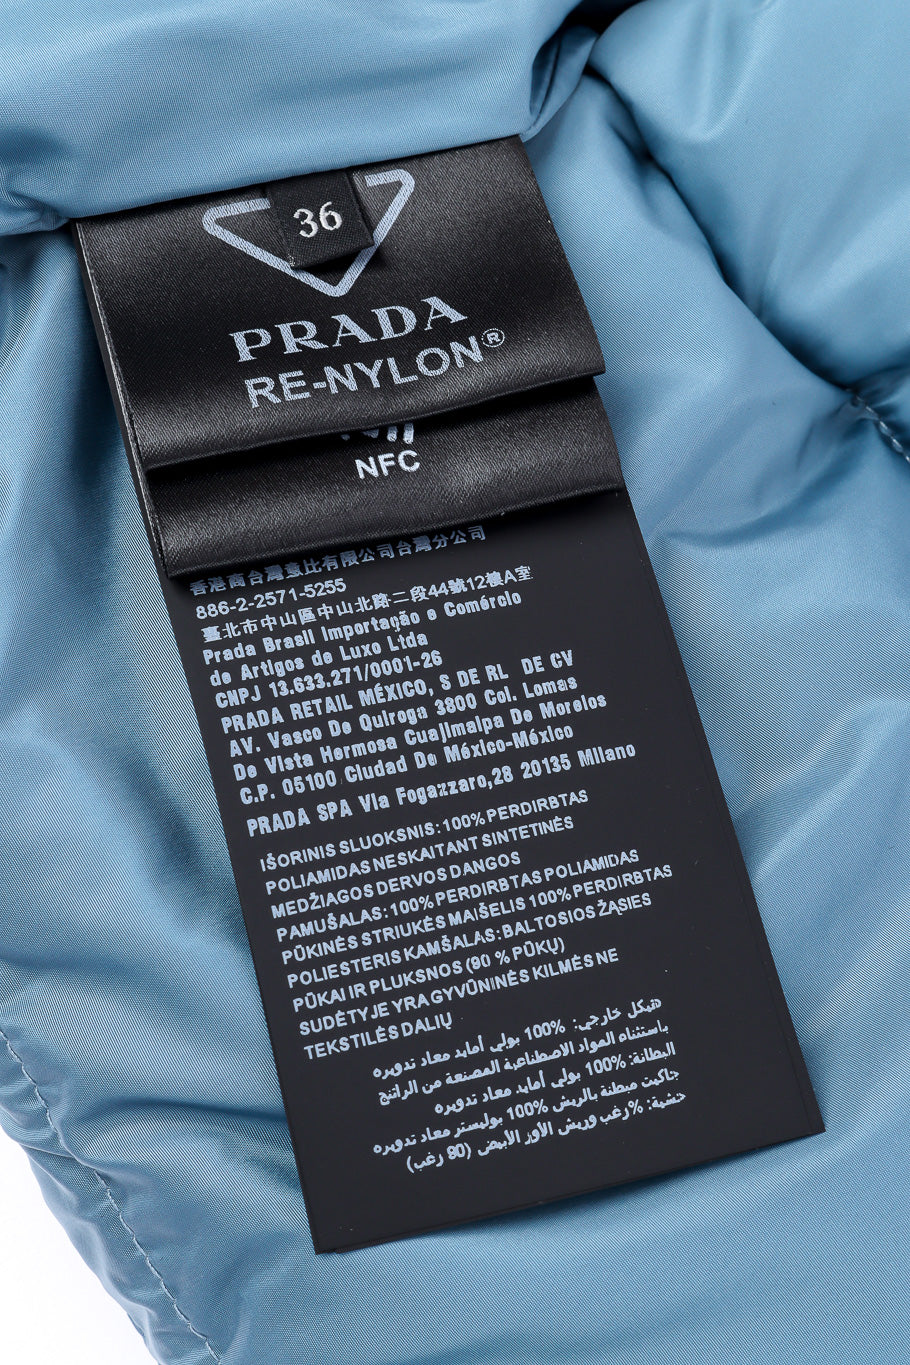 Prada Re-nylon Cropped Puffer Vest size and fabric content label closeup @Recessla